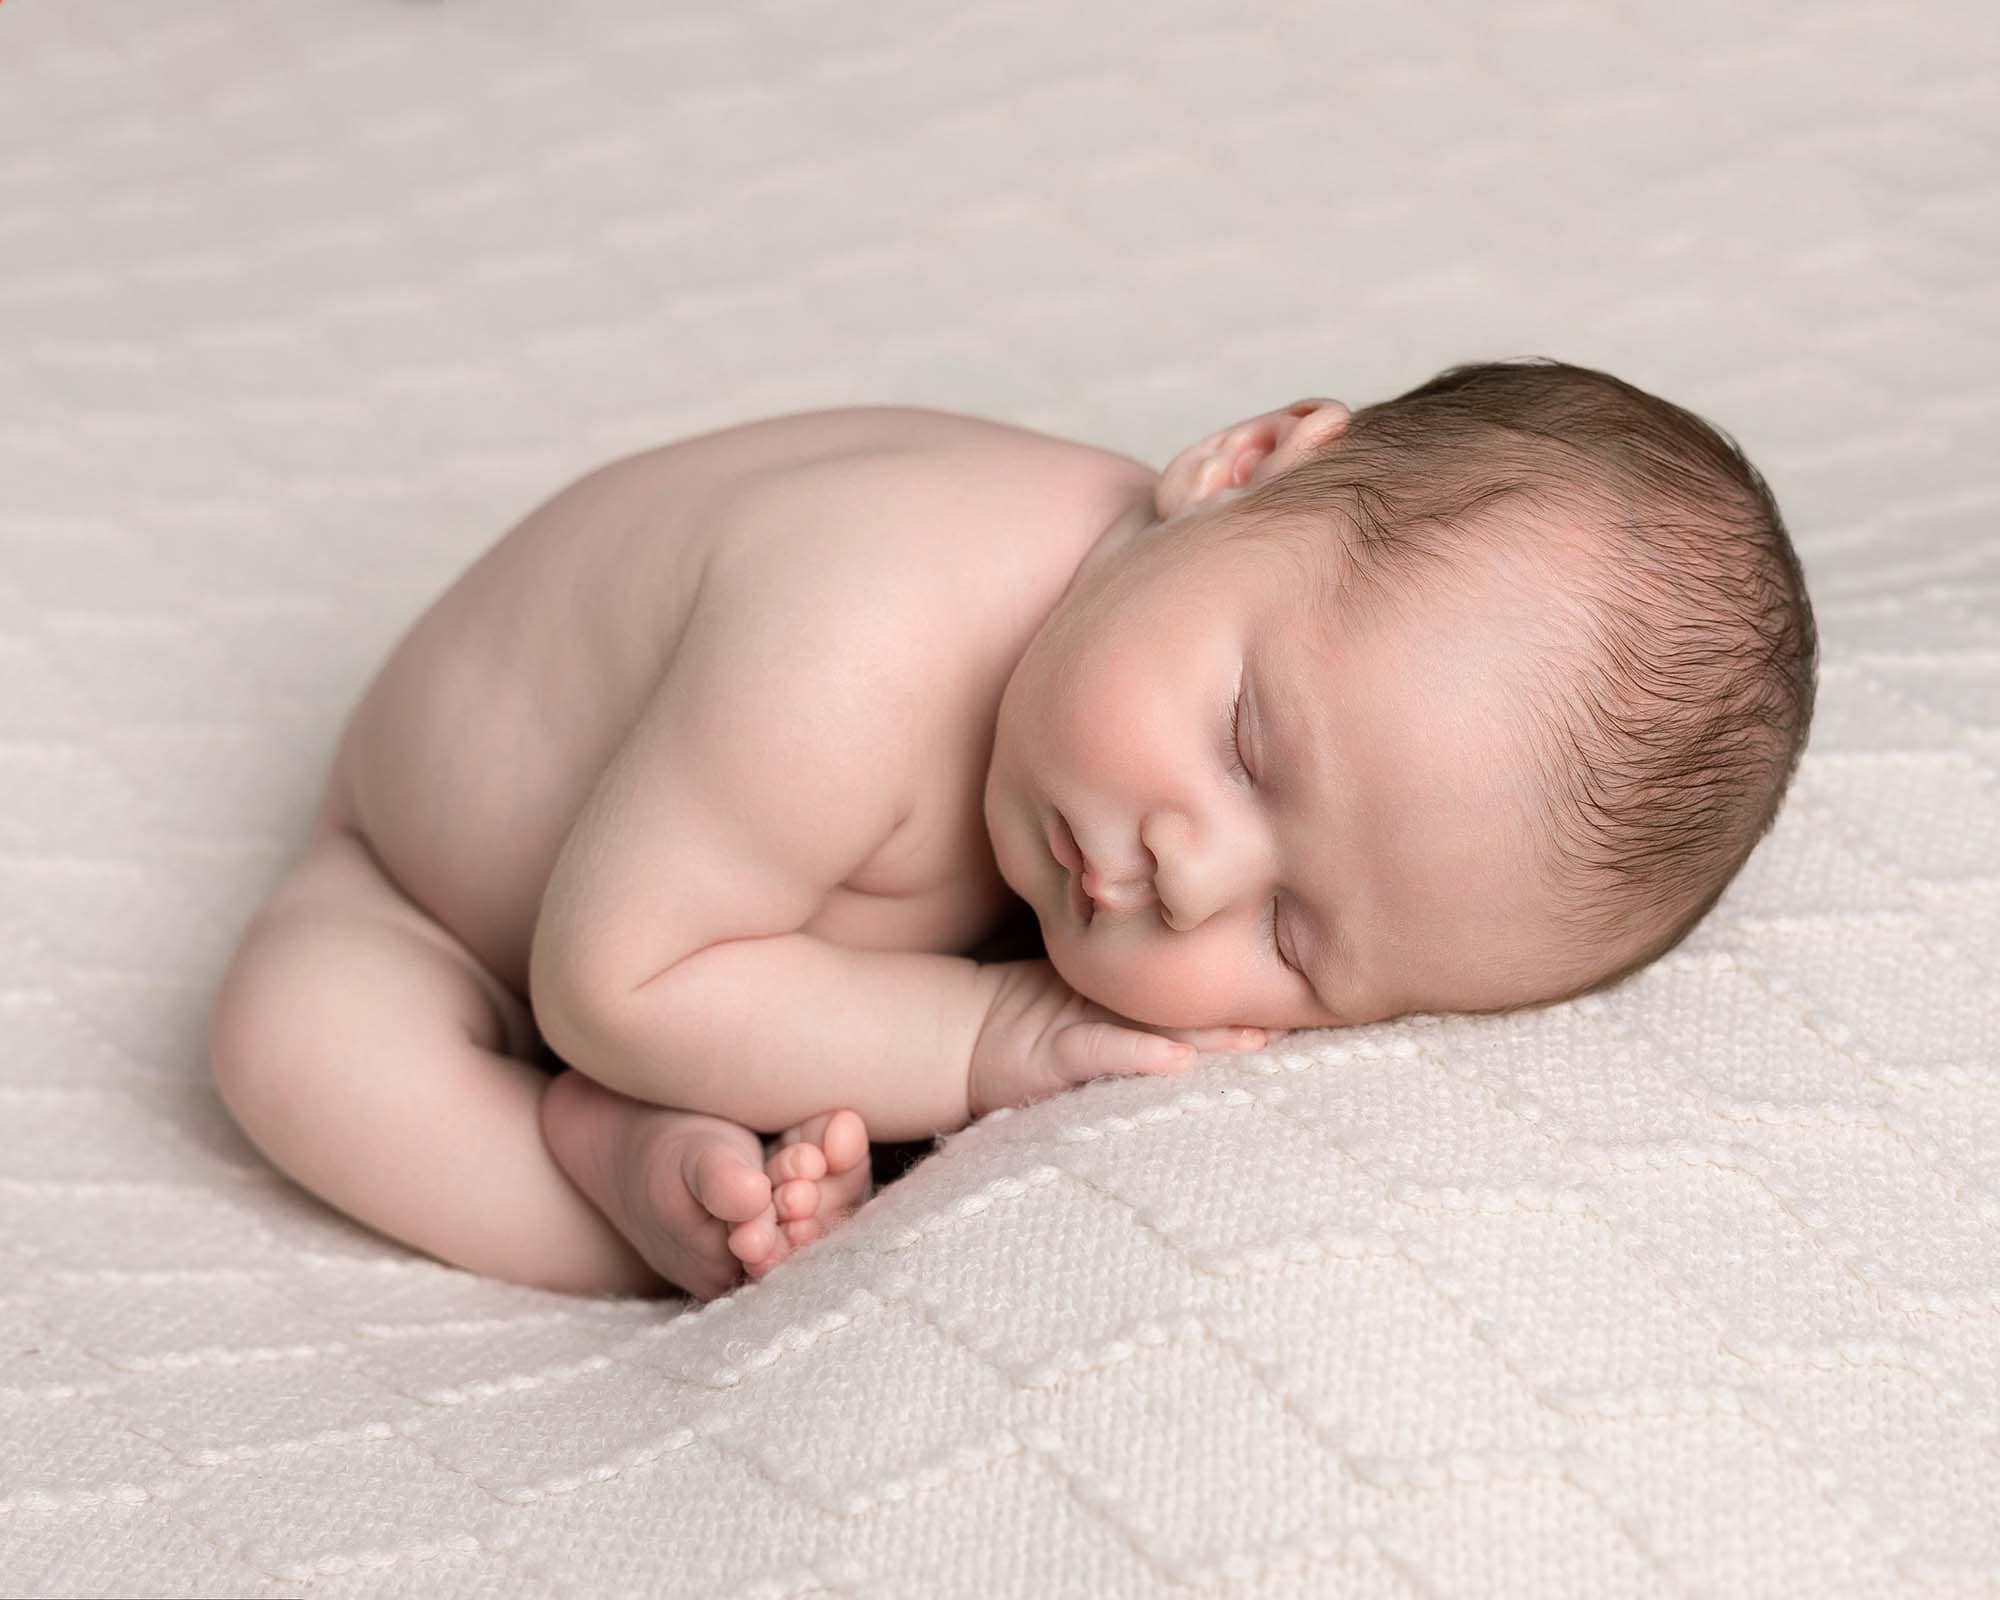 Newborn Photographer in Glasgow image of baby boy in taco pose on cream blanket whilst sleeping. Image taken at Newborn Mini Photoshoot